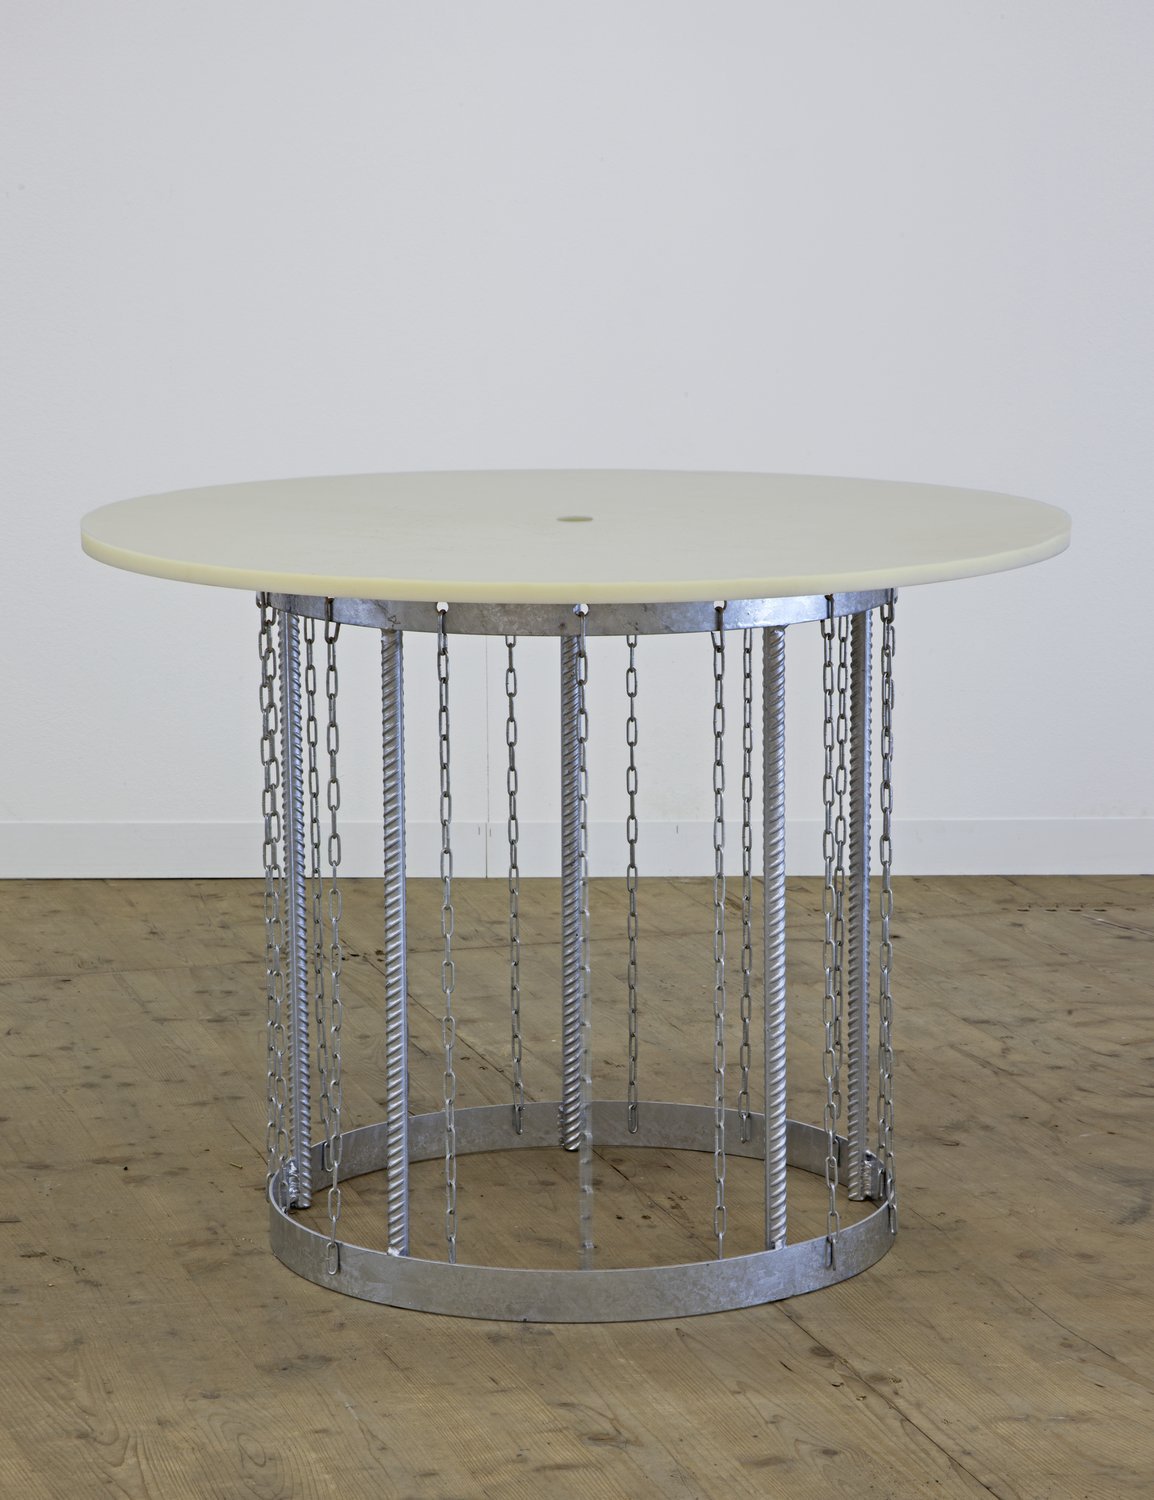 Benjamin HirteUntitled, 2015Polyamid, galvanized steel70 x ø 95 cm